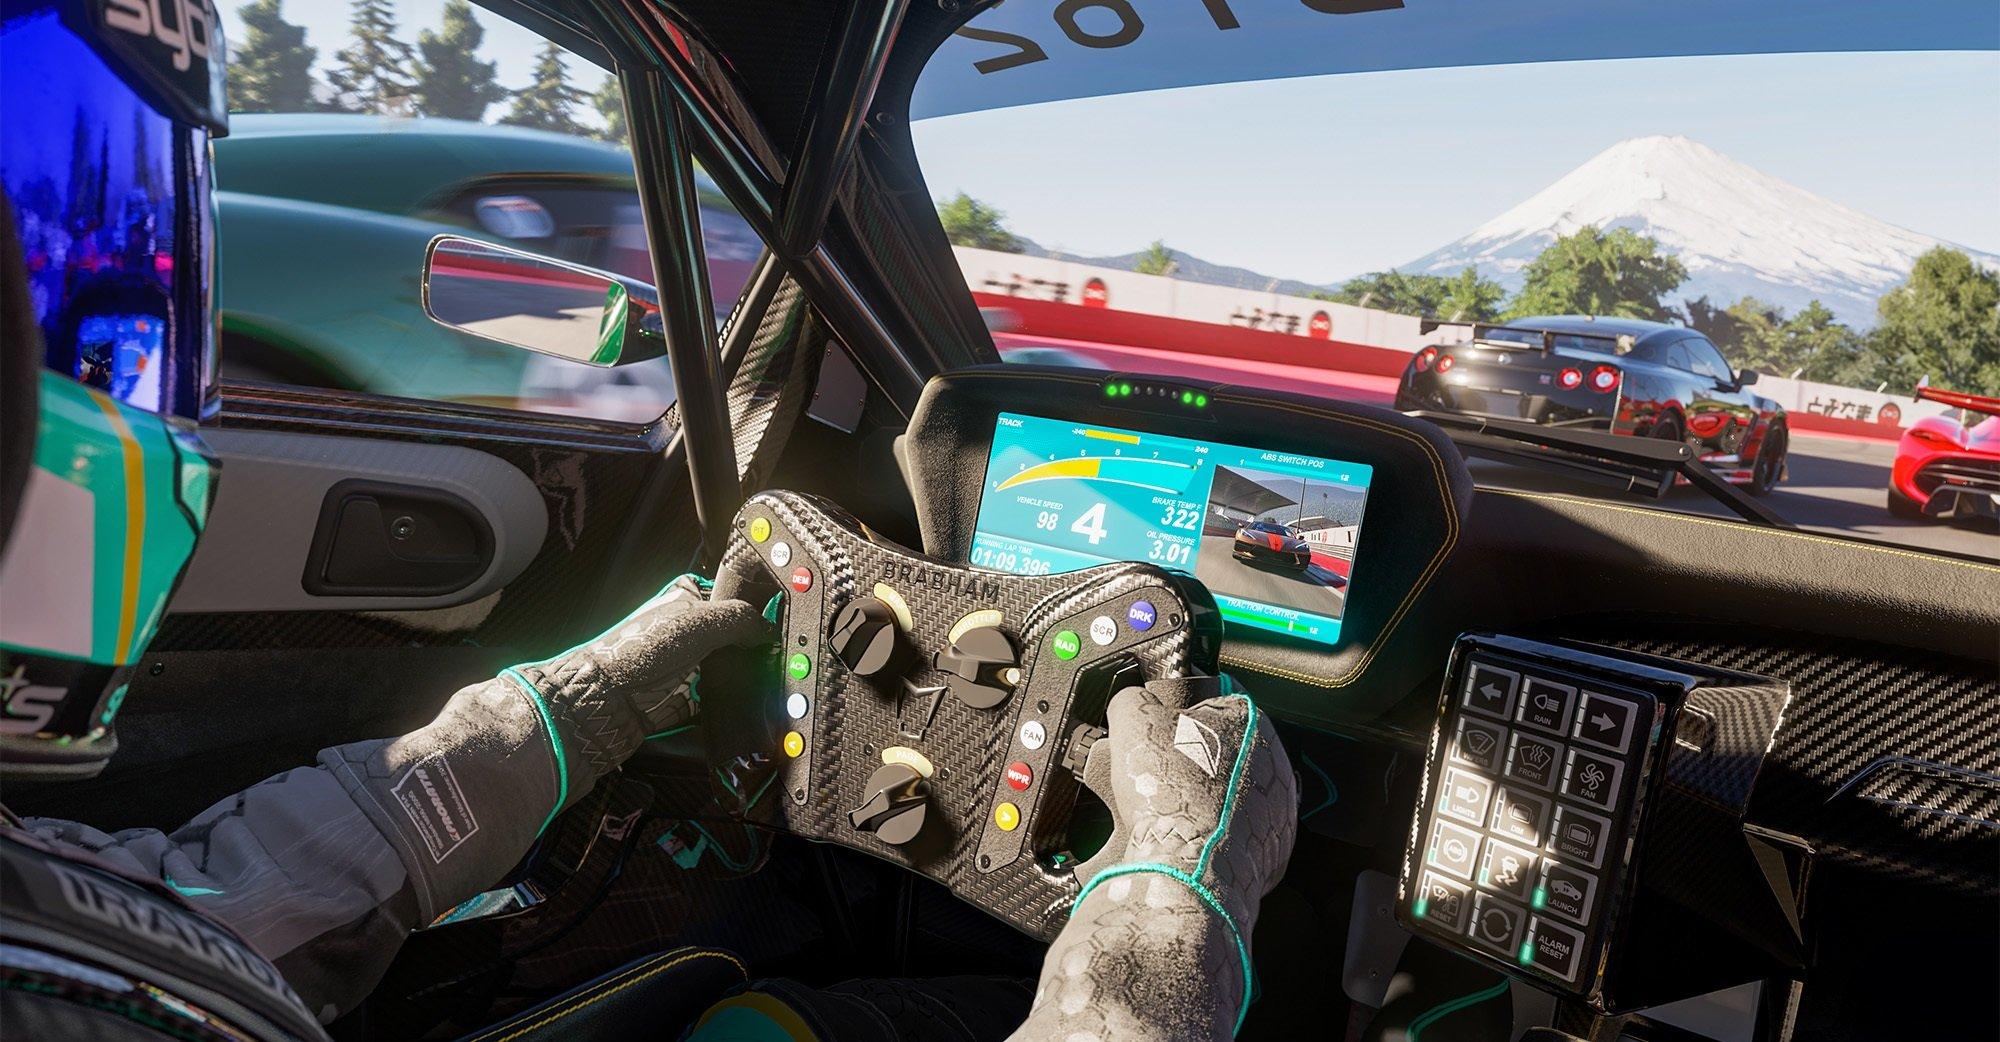 Buy Forza Motorsport Premium Add-Ons Bundle - Microsoft Store en